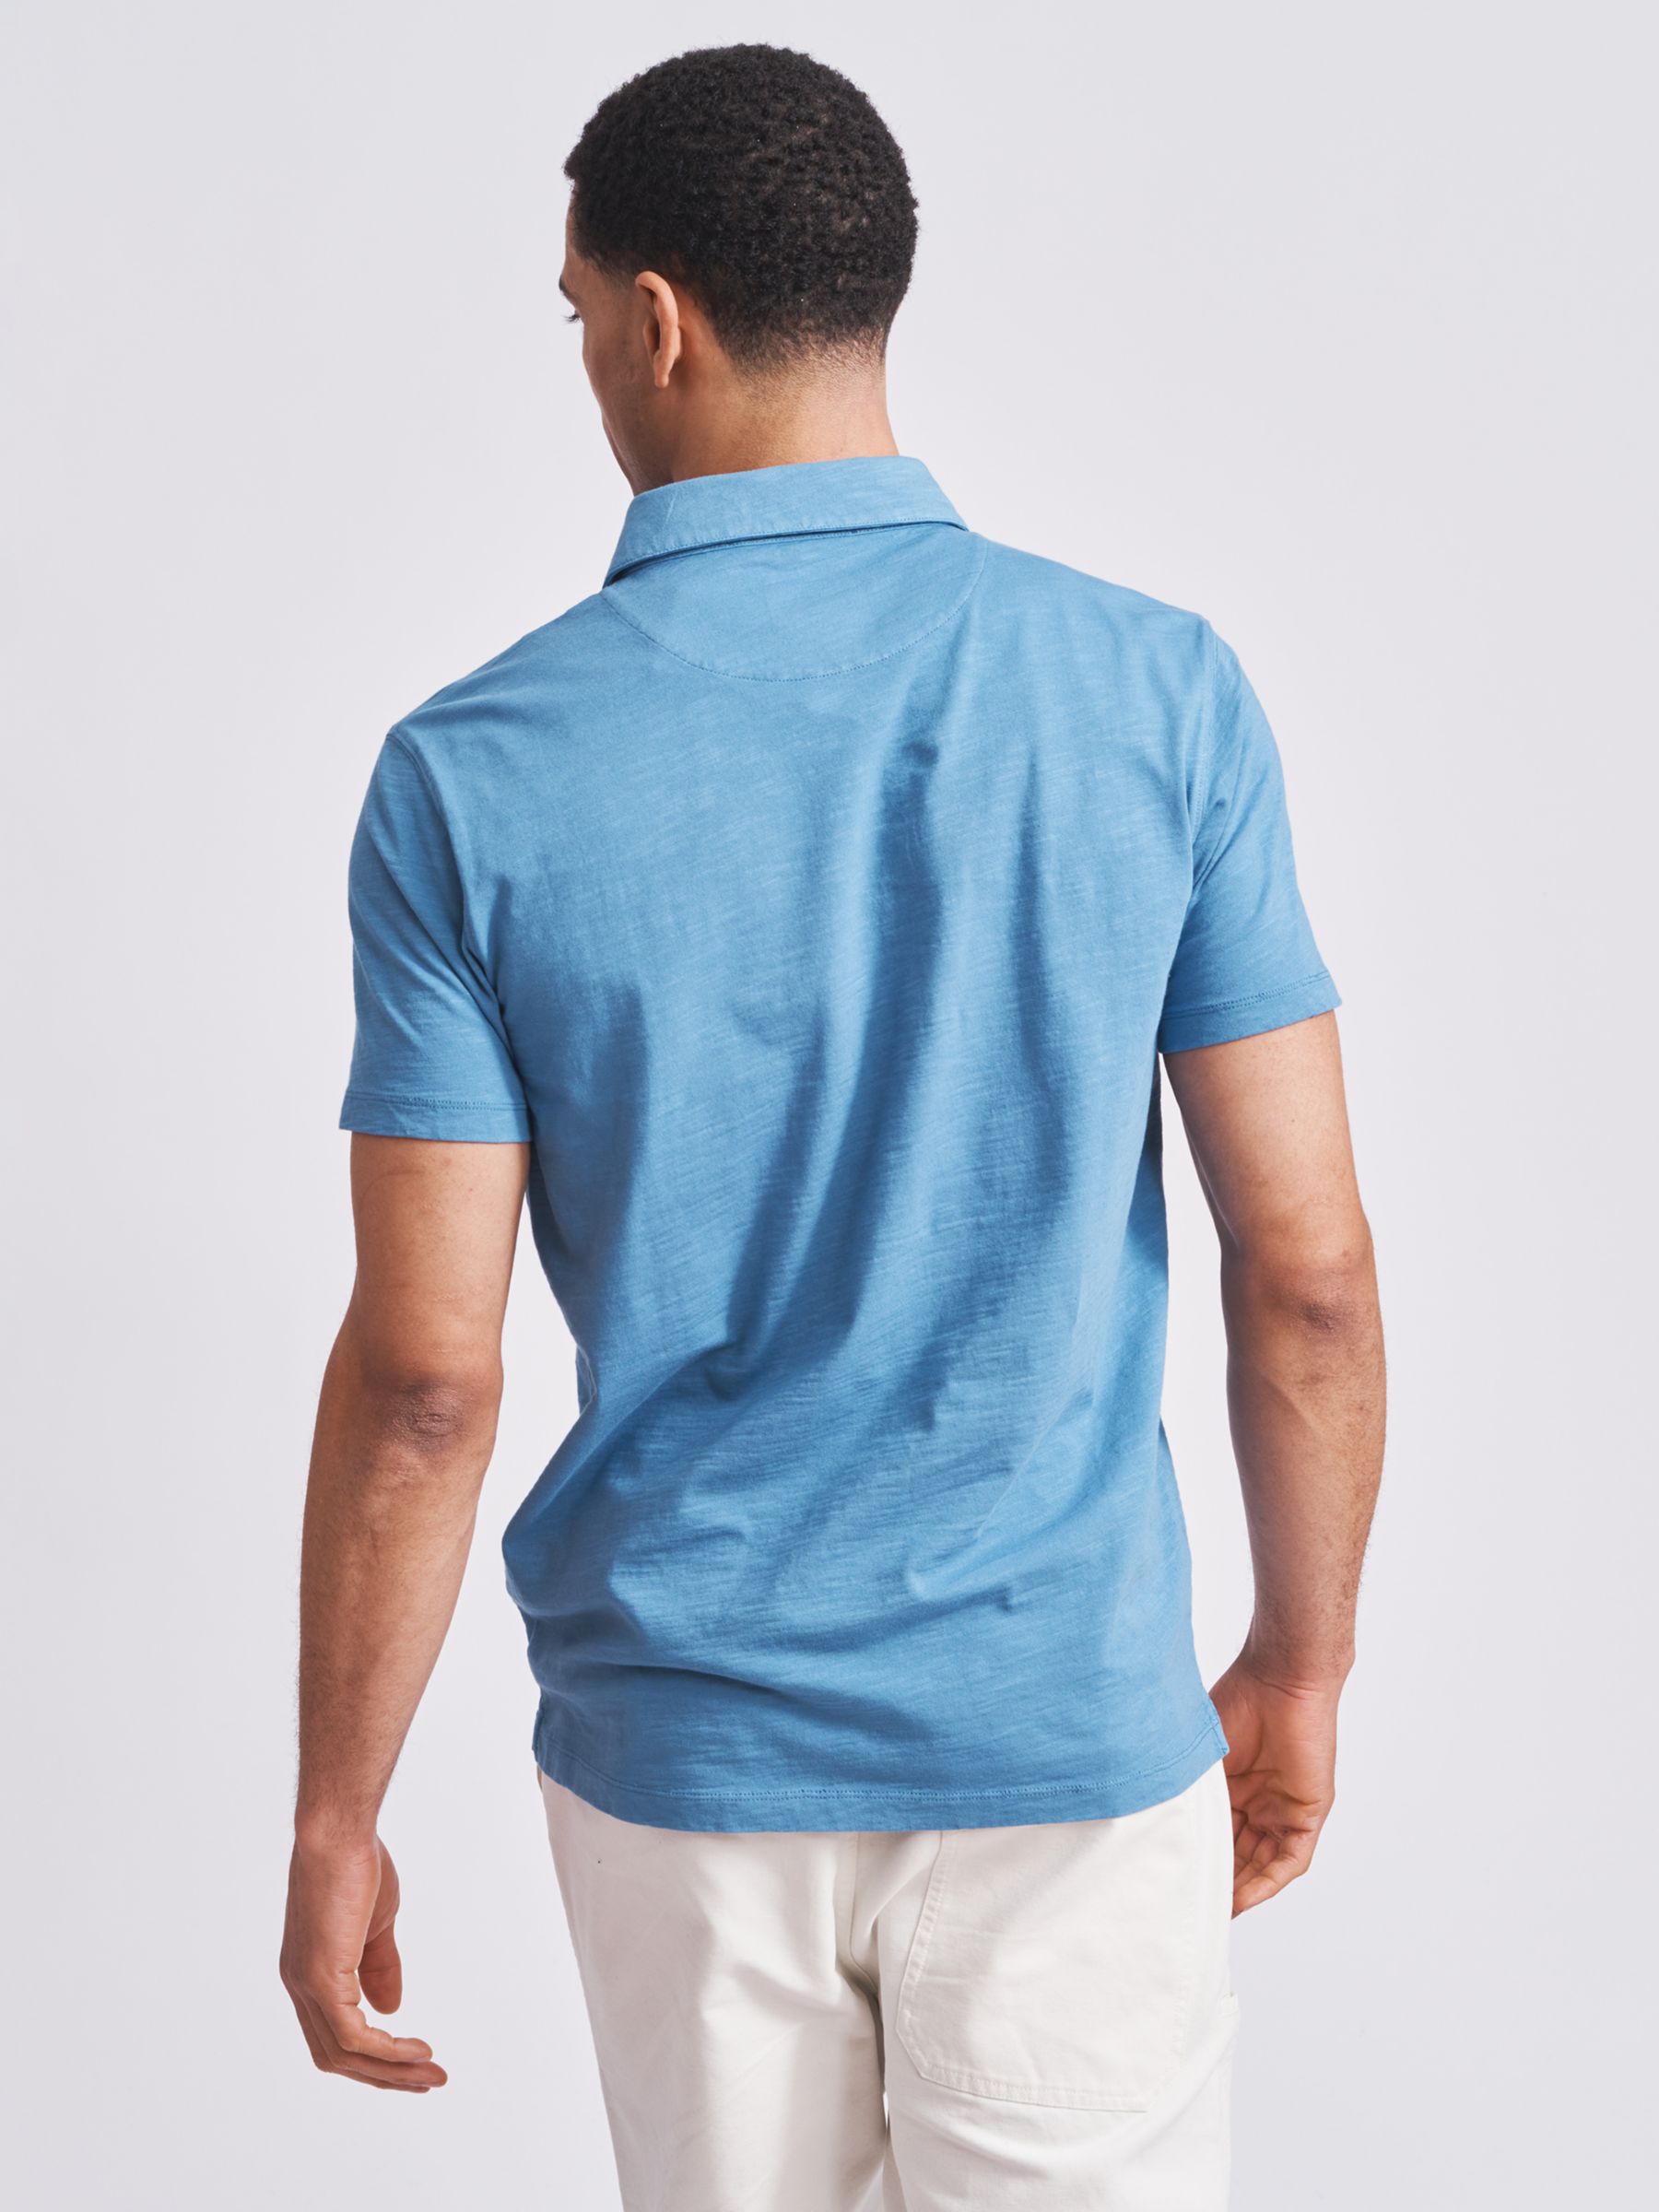 Aubin Claxby Slub Cotton Polo Shirt, Blue, S